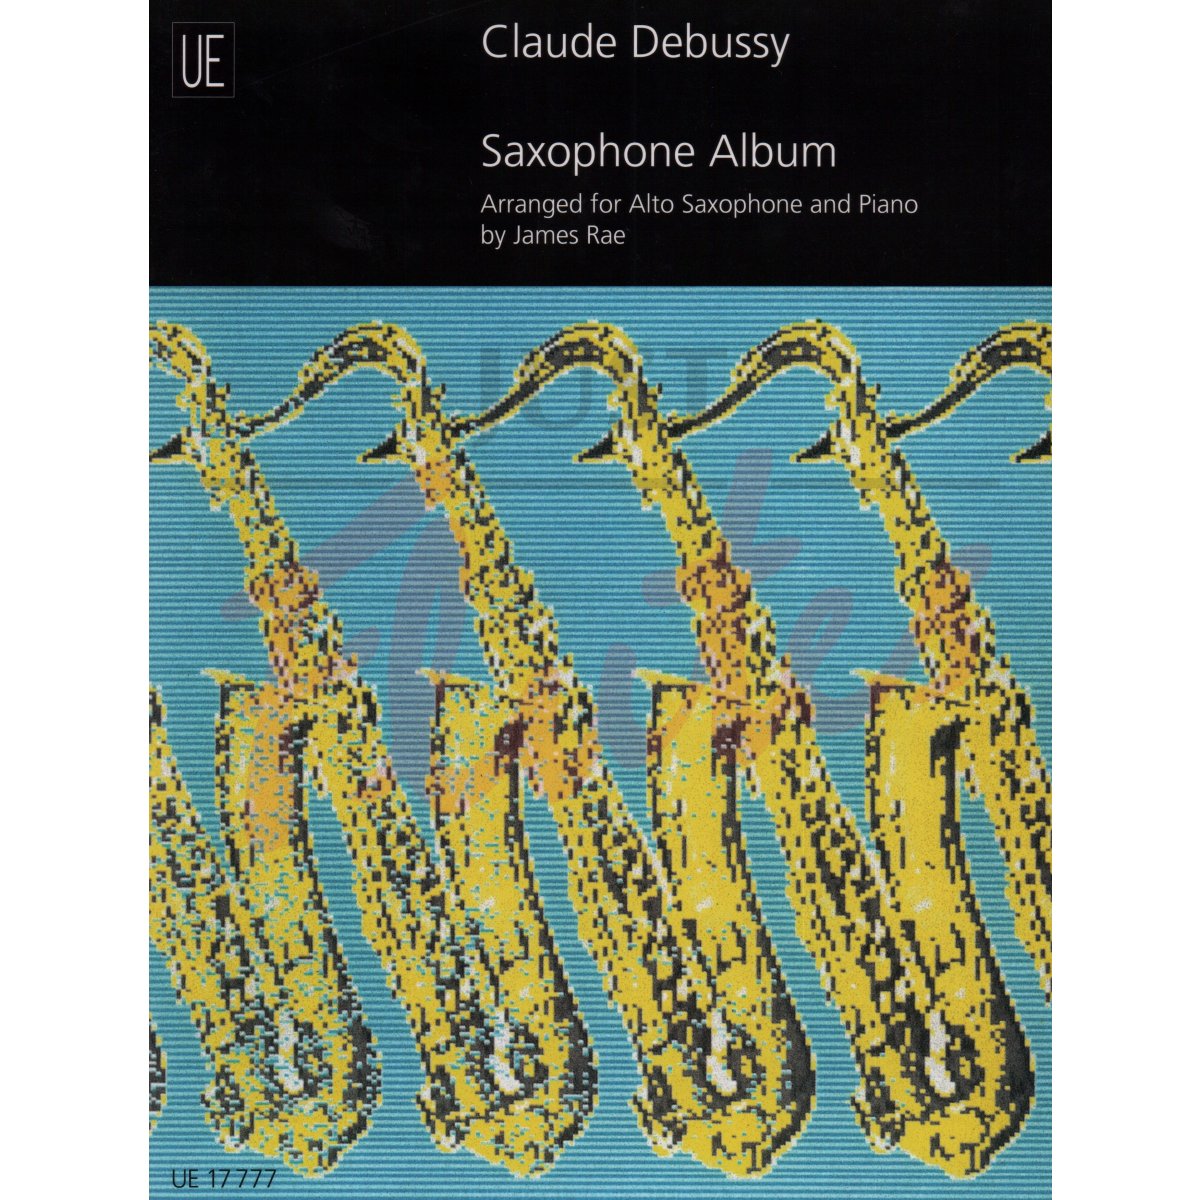 A Debussy Saxophone Album